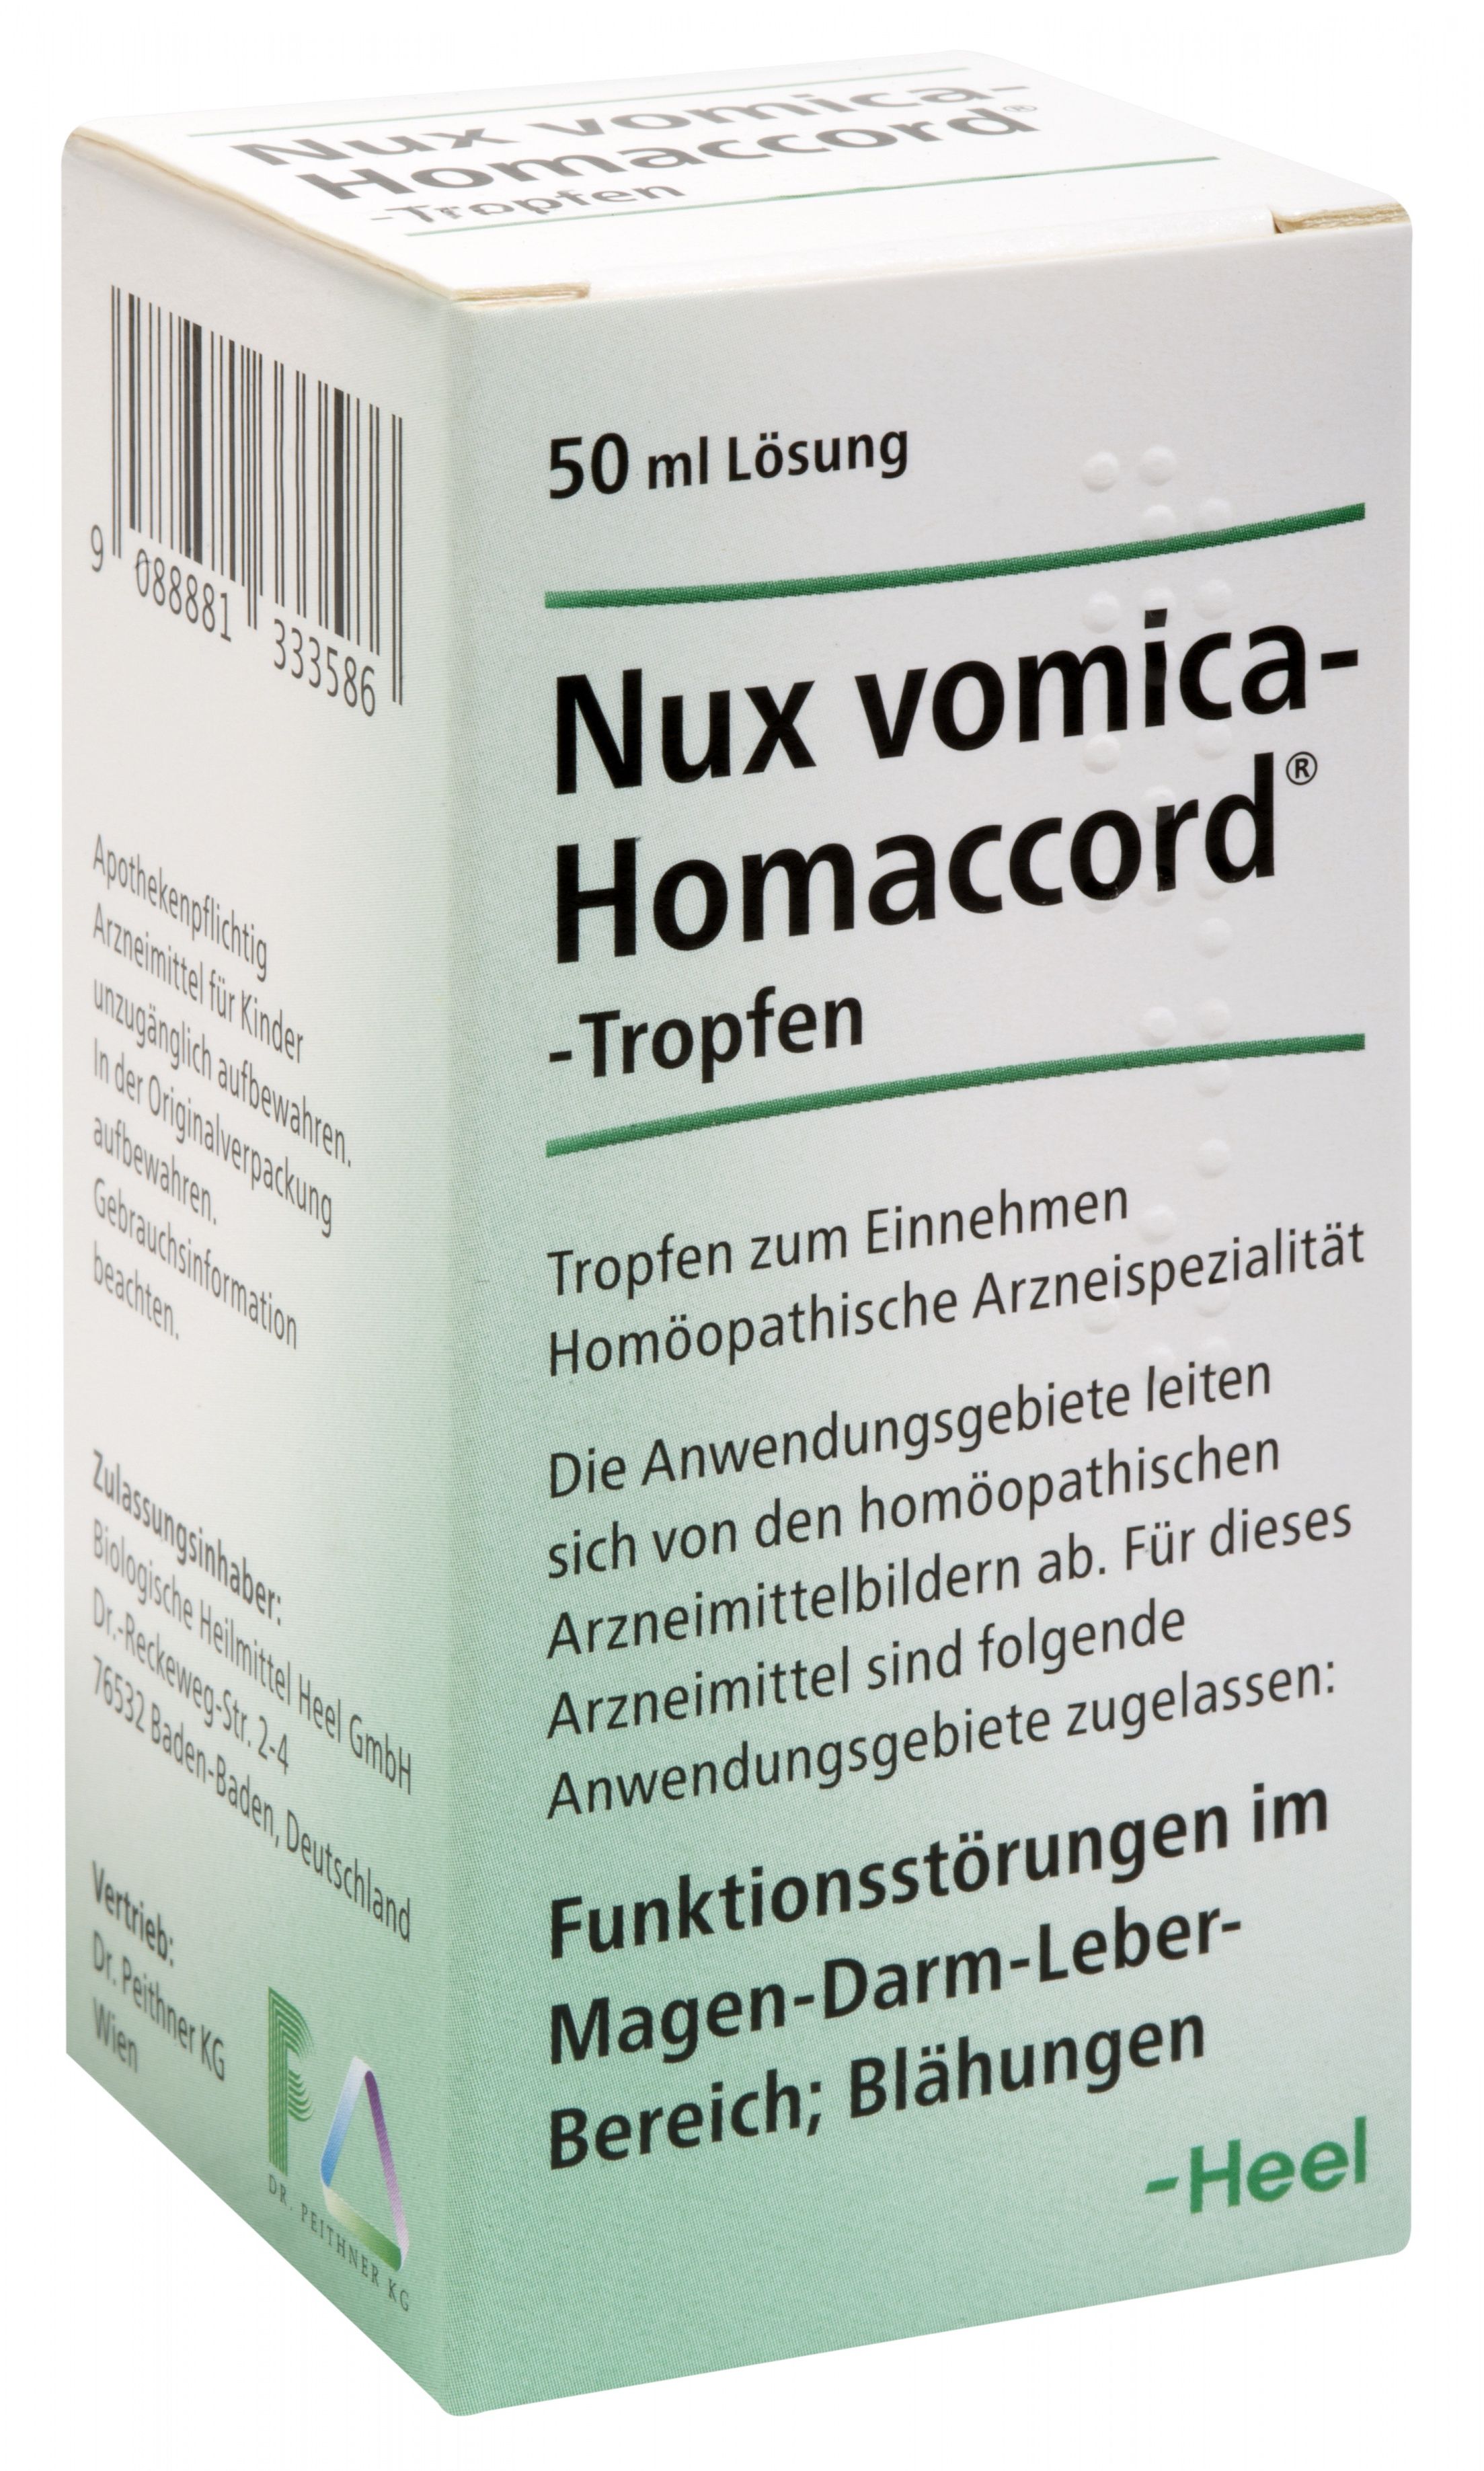 Abbildung Nux vomica-Homaccord-Tropfen